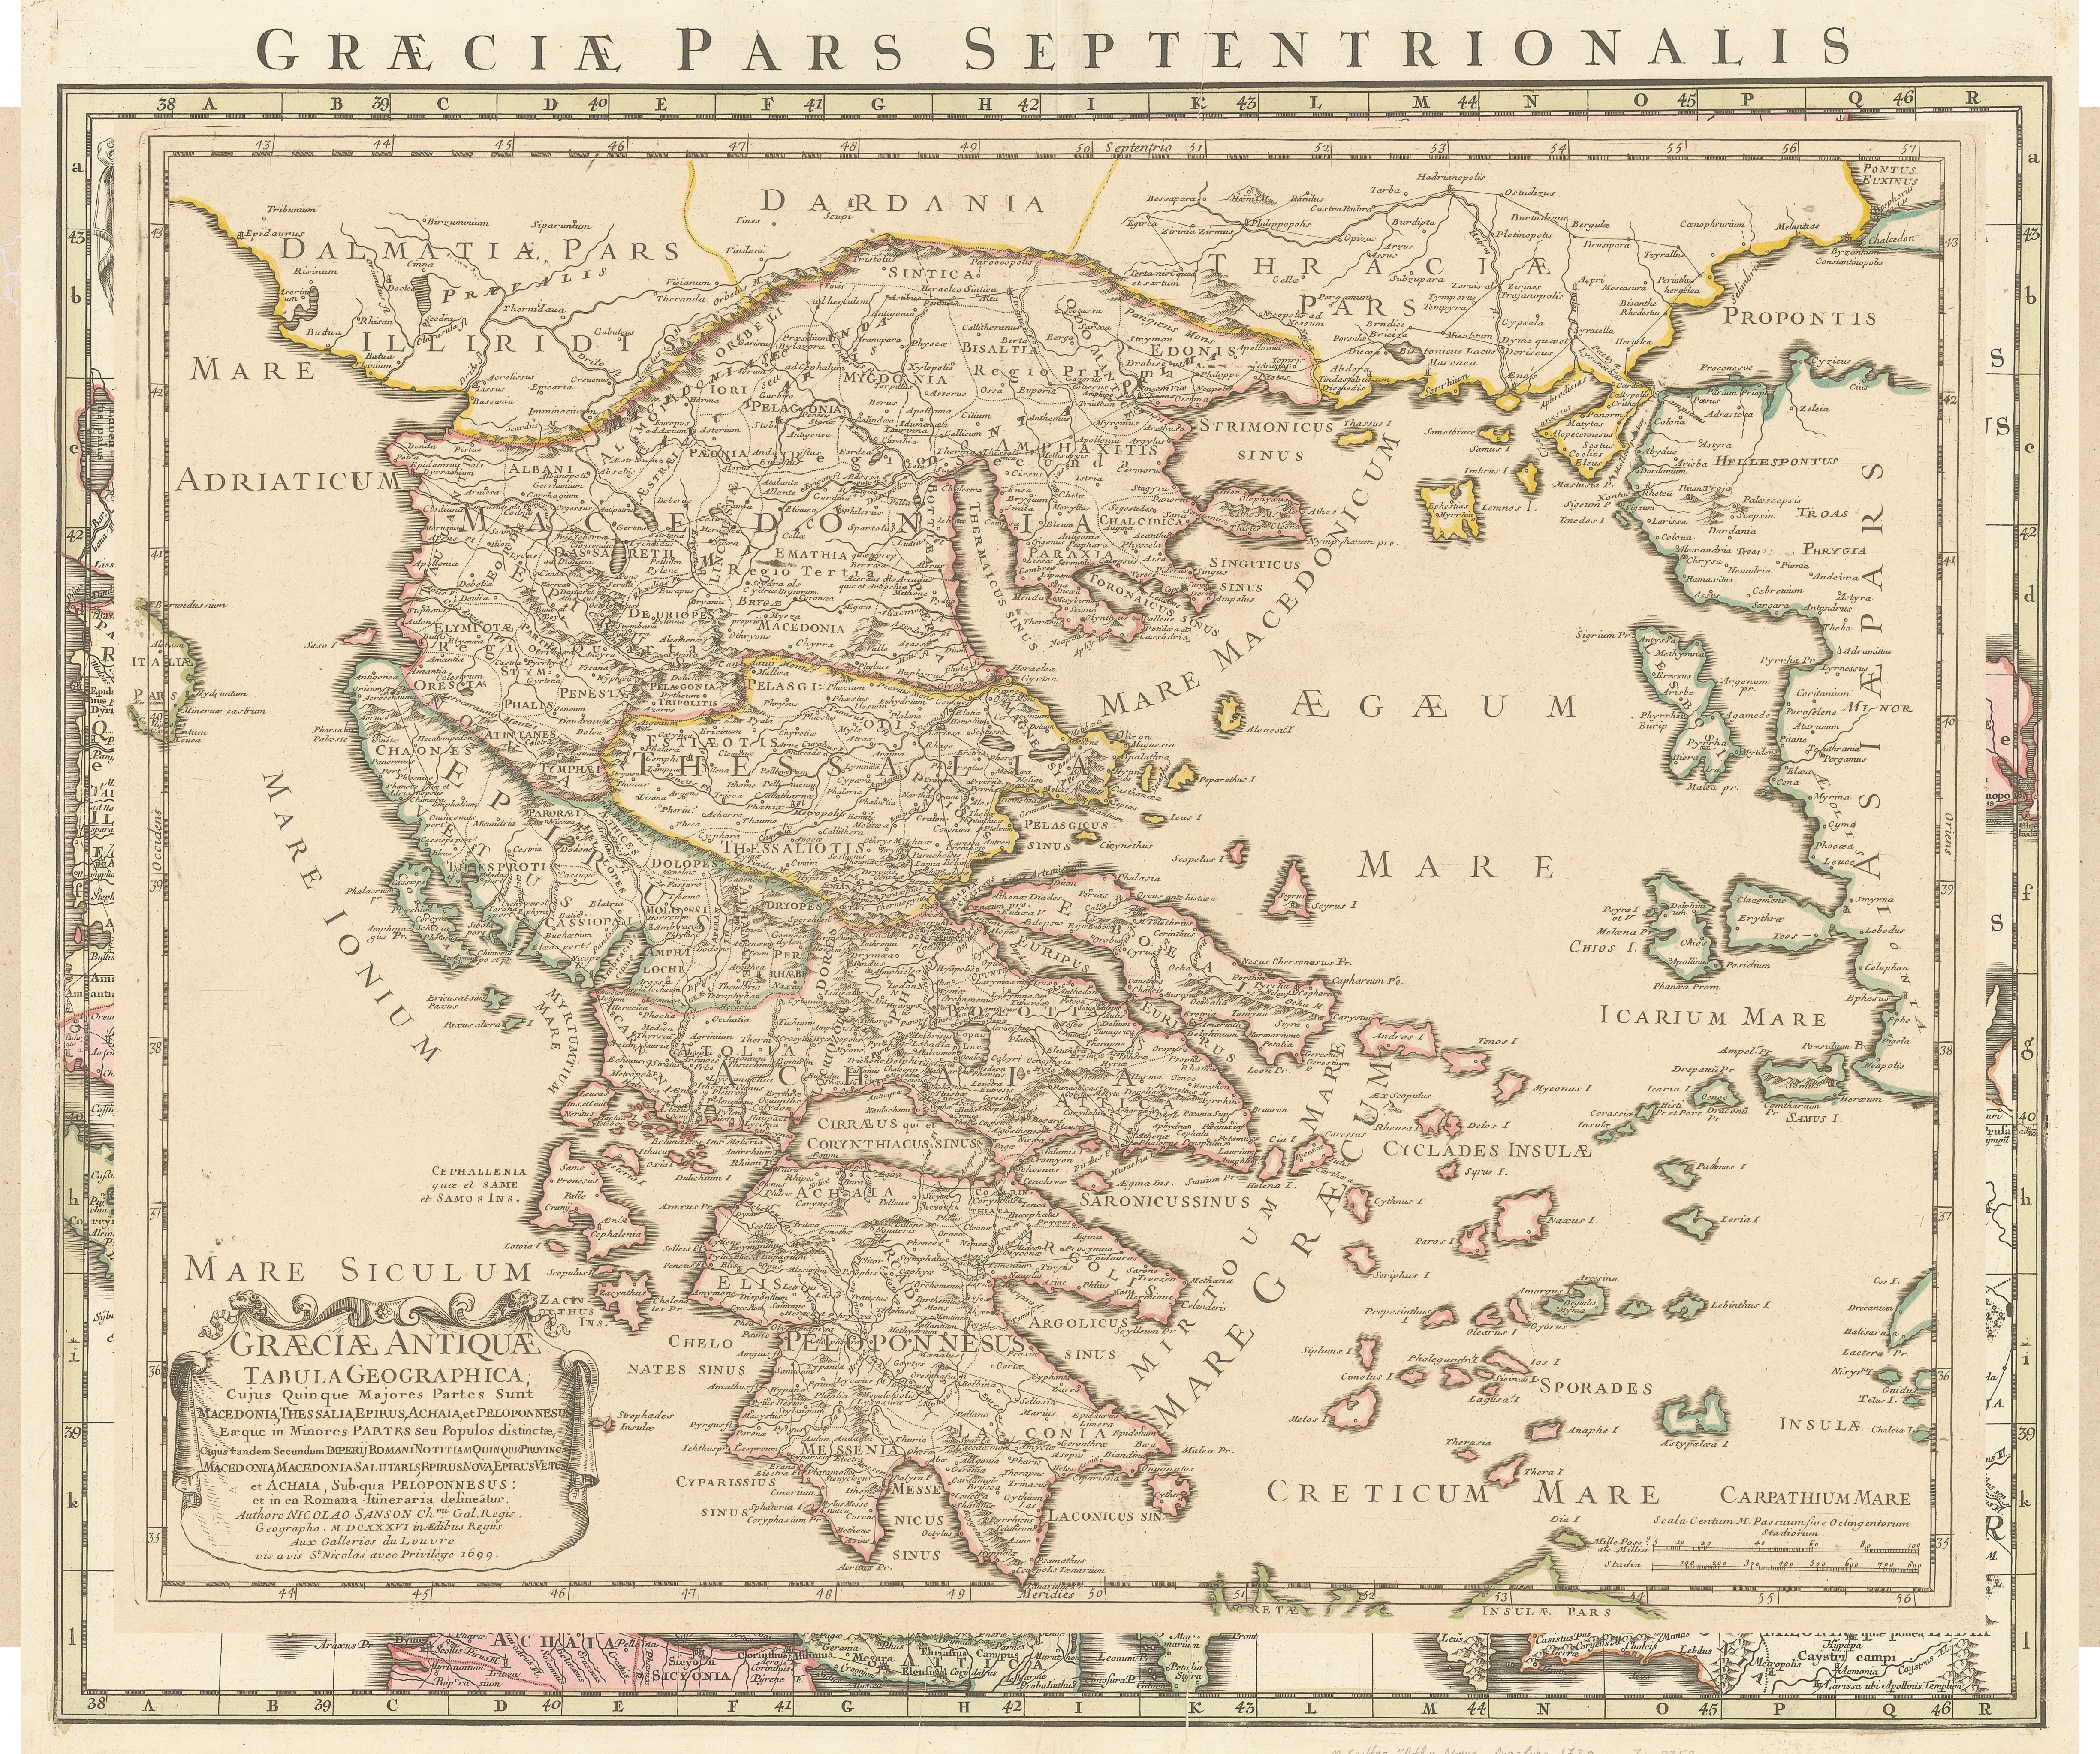  NICOLAS SANSON, ΠΑΡΙΣΙ  1699. Χάρτης της αρχαίας Ελλάδος με τα μεγαλύτερα τμήματά της, που είναι η Μακεδονία, η Θεσσαλία, η Ηπειρος, η Αχαΐα (Στερεά Ελλάδα) και η Πελοπόννησος. Σημειώνει επίσης τις τέσσερις μερίδες στις οποίες διαιρέθηκε διοικητικά η Μακεδονία μεταξύ 168 π.Χ. και 148 π.Χ. από τους Ρωμαίους, αλλά και  τη μετέπειτα επαρχία της Μακεδονίας που ίδρυσαν οι ίδιοι και που έφθανε έως το Ιόνιο Πέλαγος. Ο μεγάλος Γάλλος χαρτογράφος τοποθετεί πάλι τα Σκόπια στην αρχαία Δαρδανία, ενώ το Βόρειο Αιγαίο τ